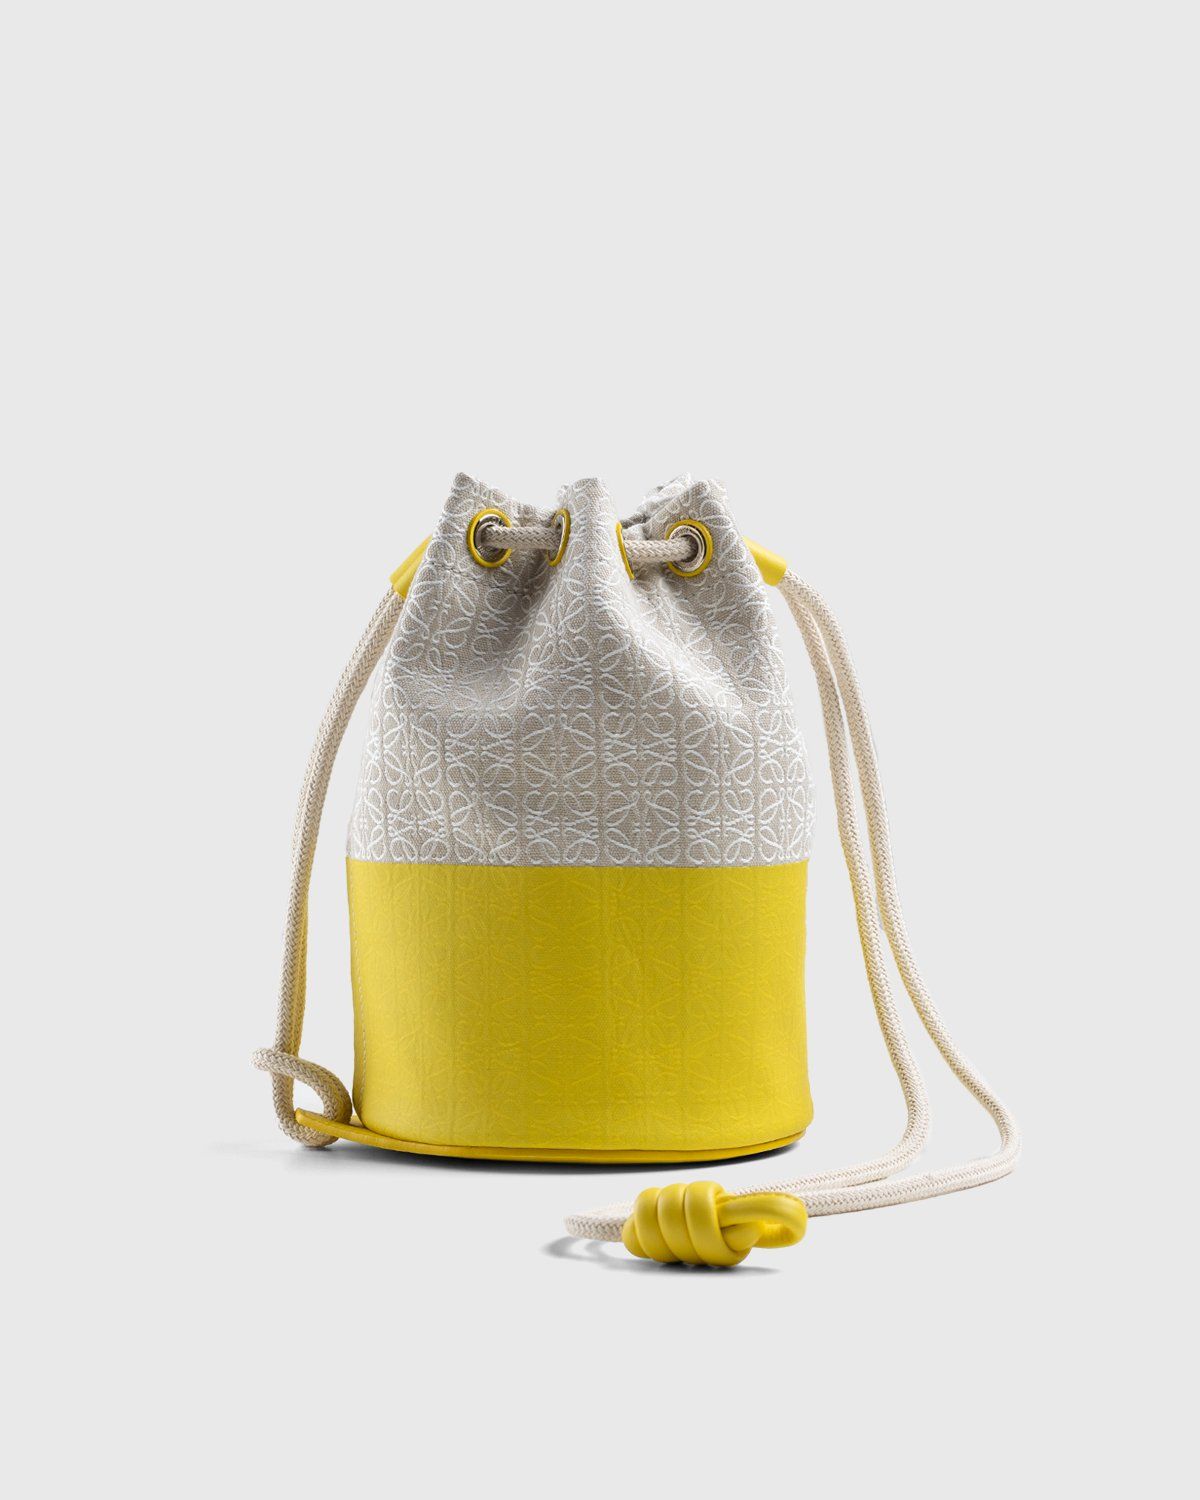 Loewe – Paula's Ibiza Small Sailor Bag Ecru/Lemon - Shoulder Bags - Yellow - Image 2